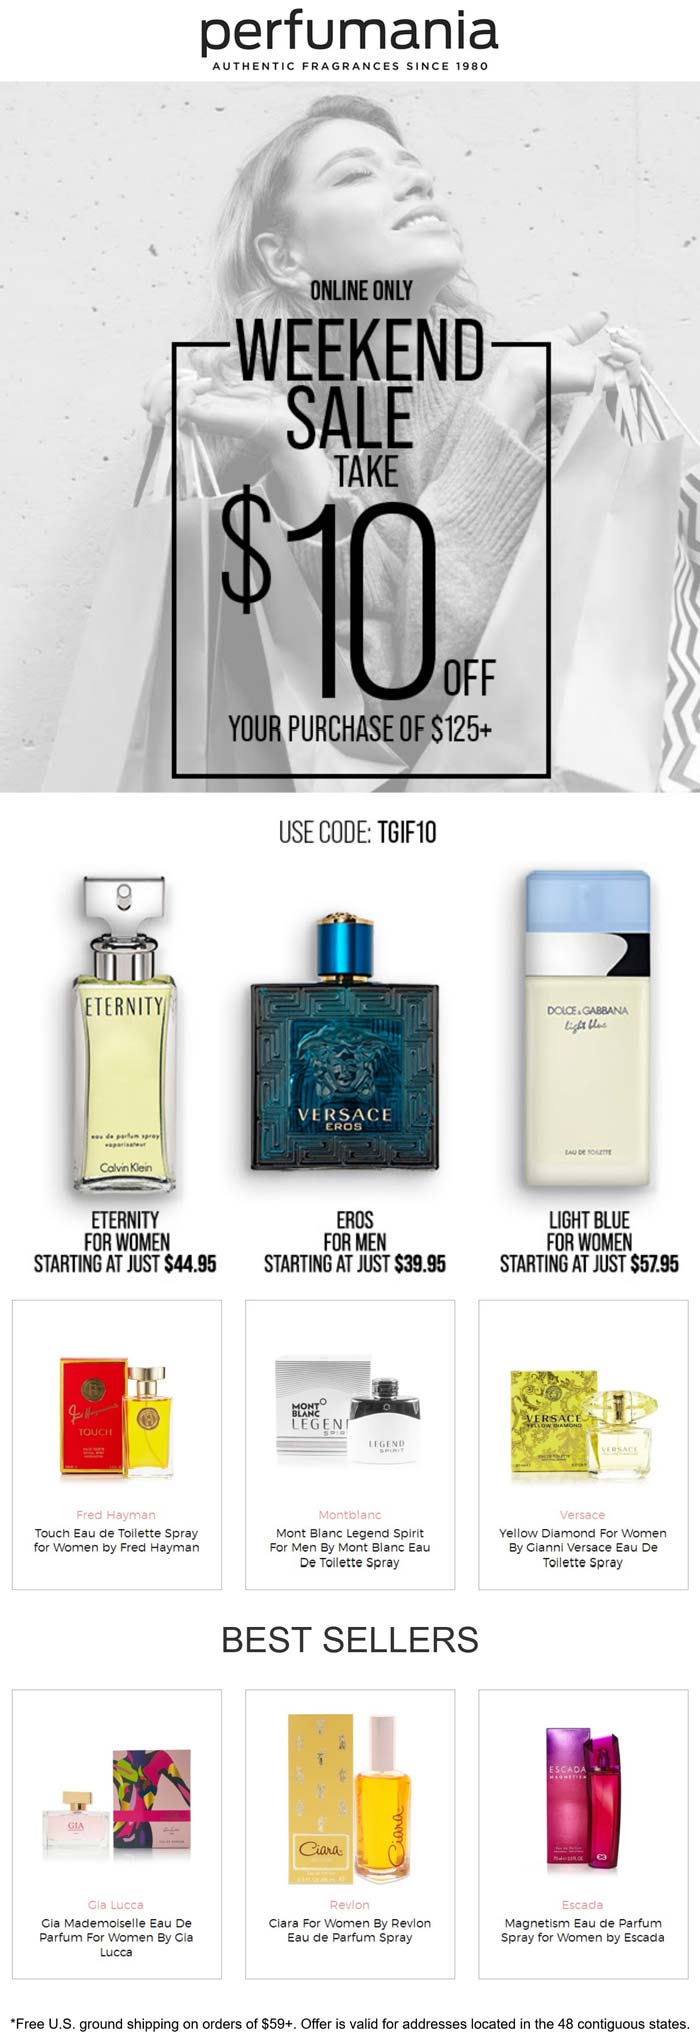 Perfumania stores Coupon  $10 off $125 at Perfumania via promo code TGIF10 #perfumania 